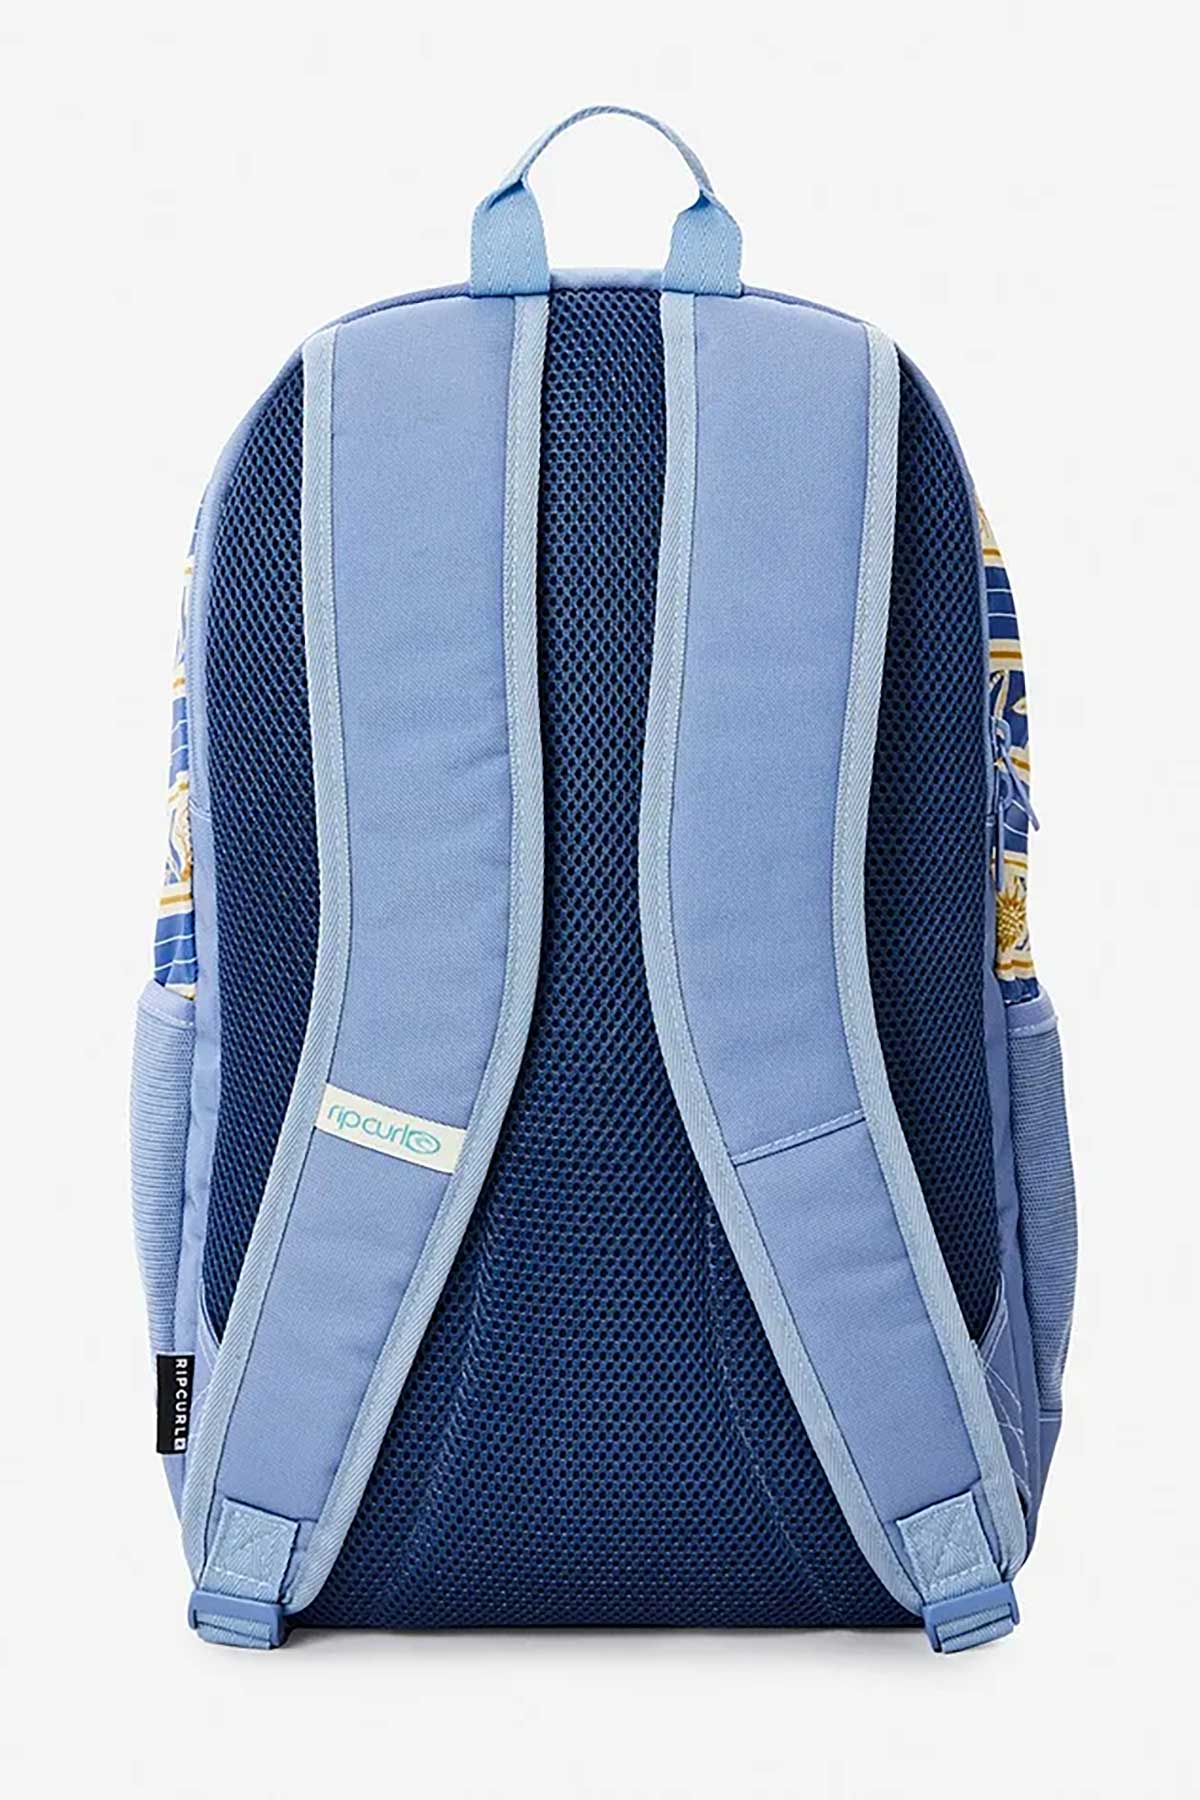 Rip Curl Backpack - Ozone 2.0 30 L